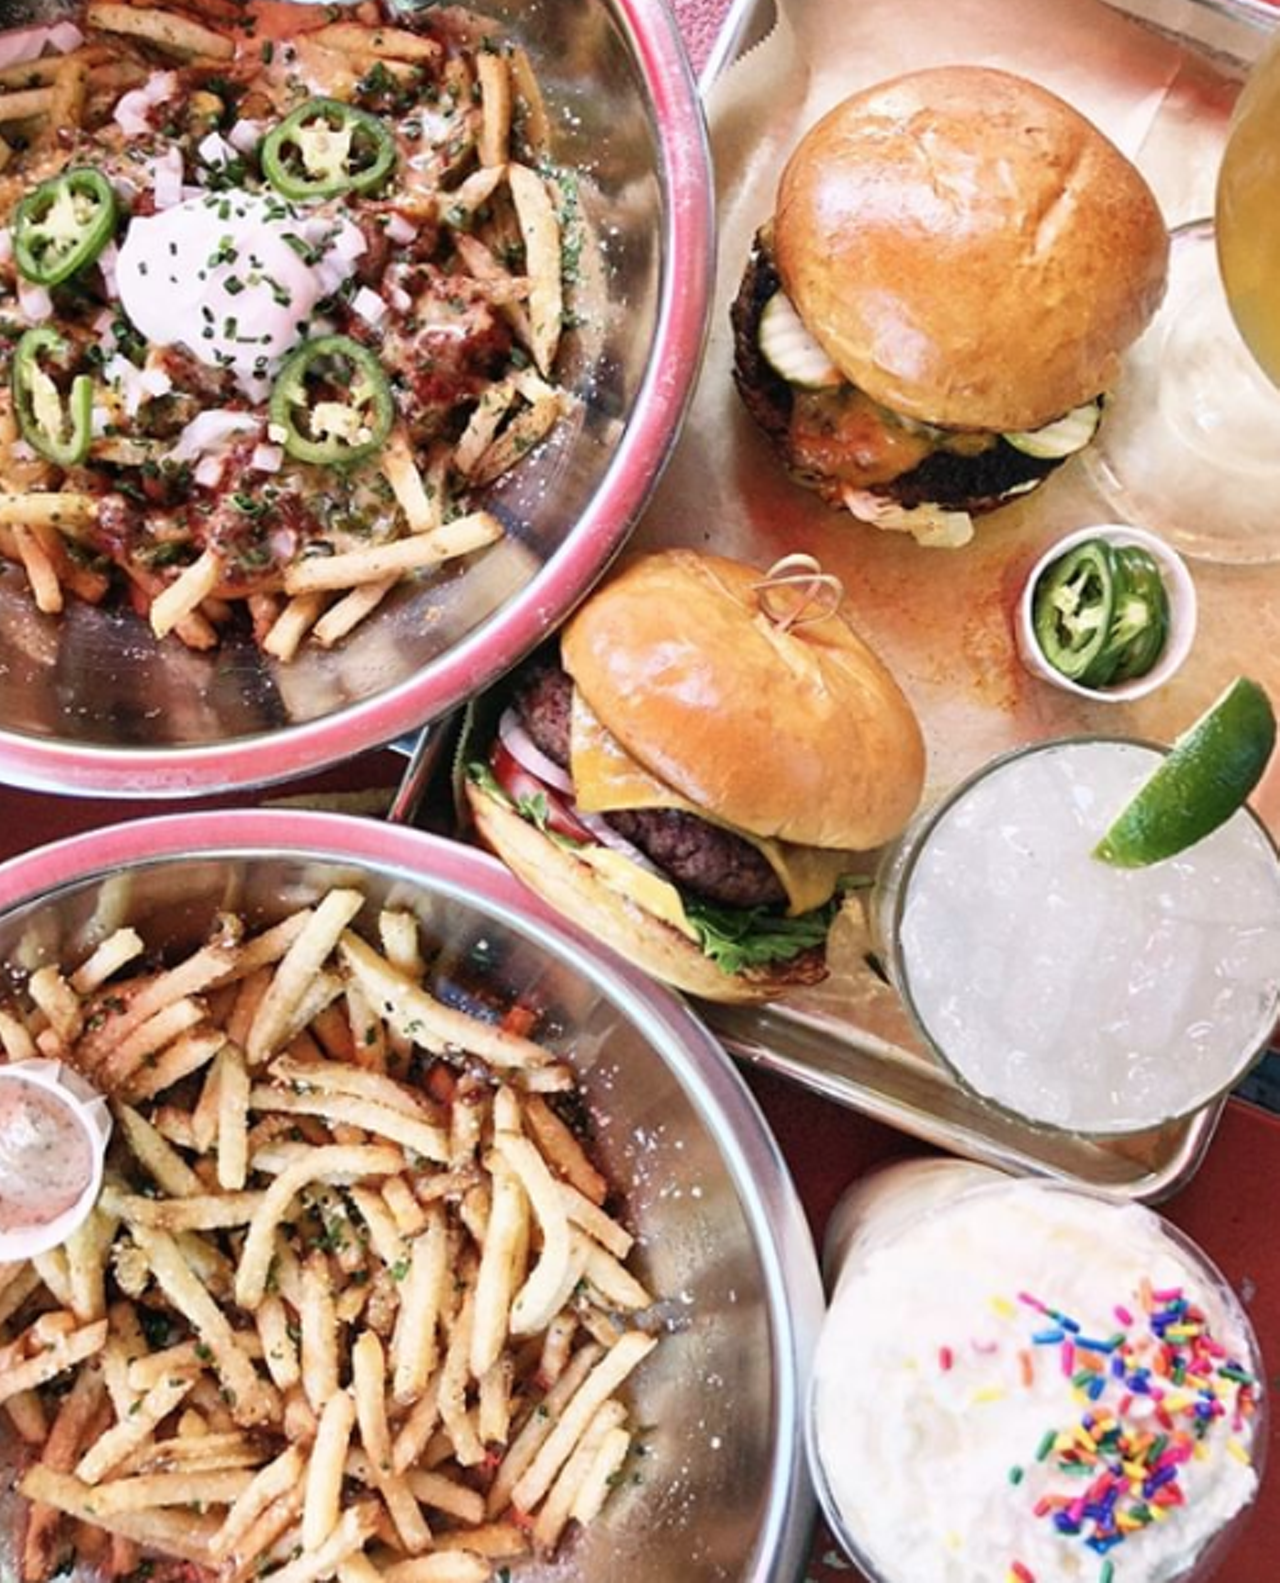 A Texas chain is demanding San Antonio's Papa's Burgers change its